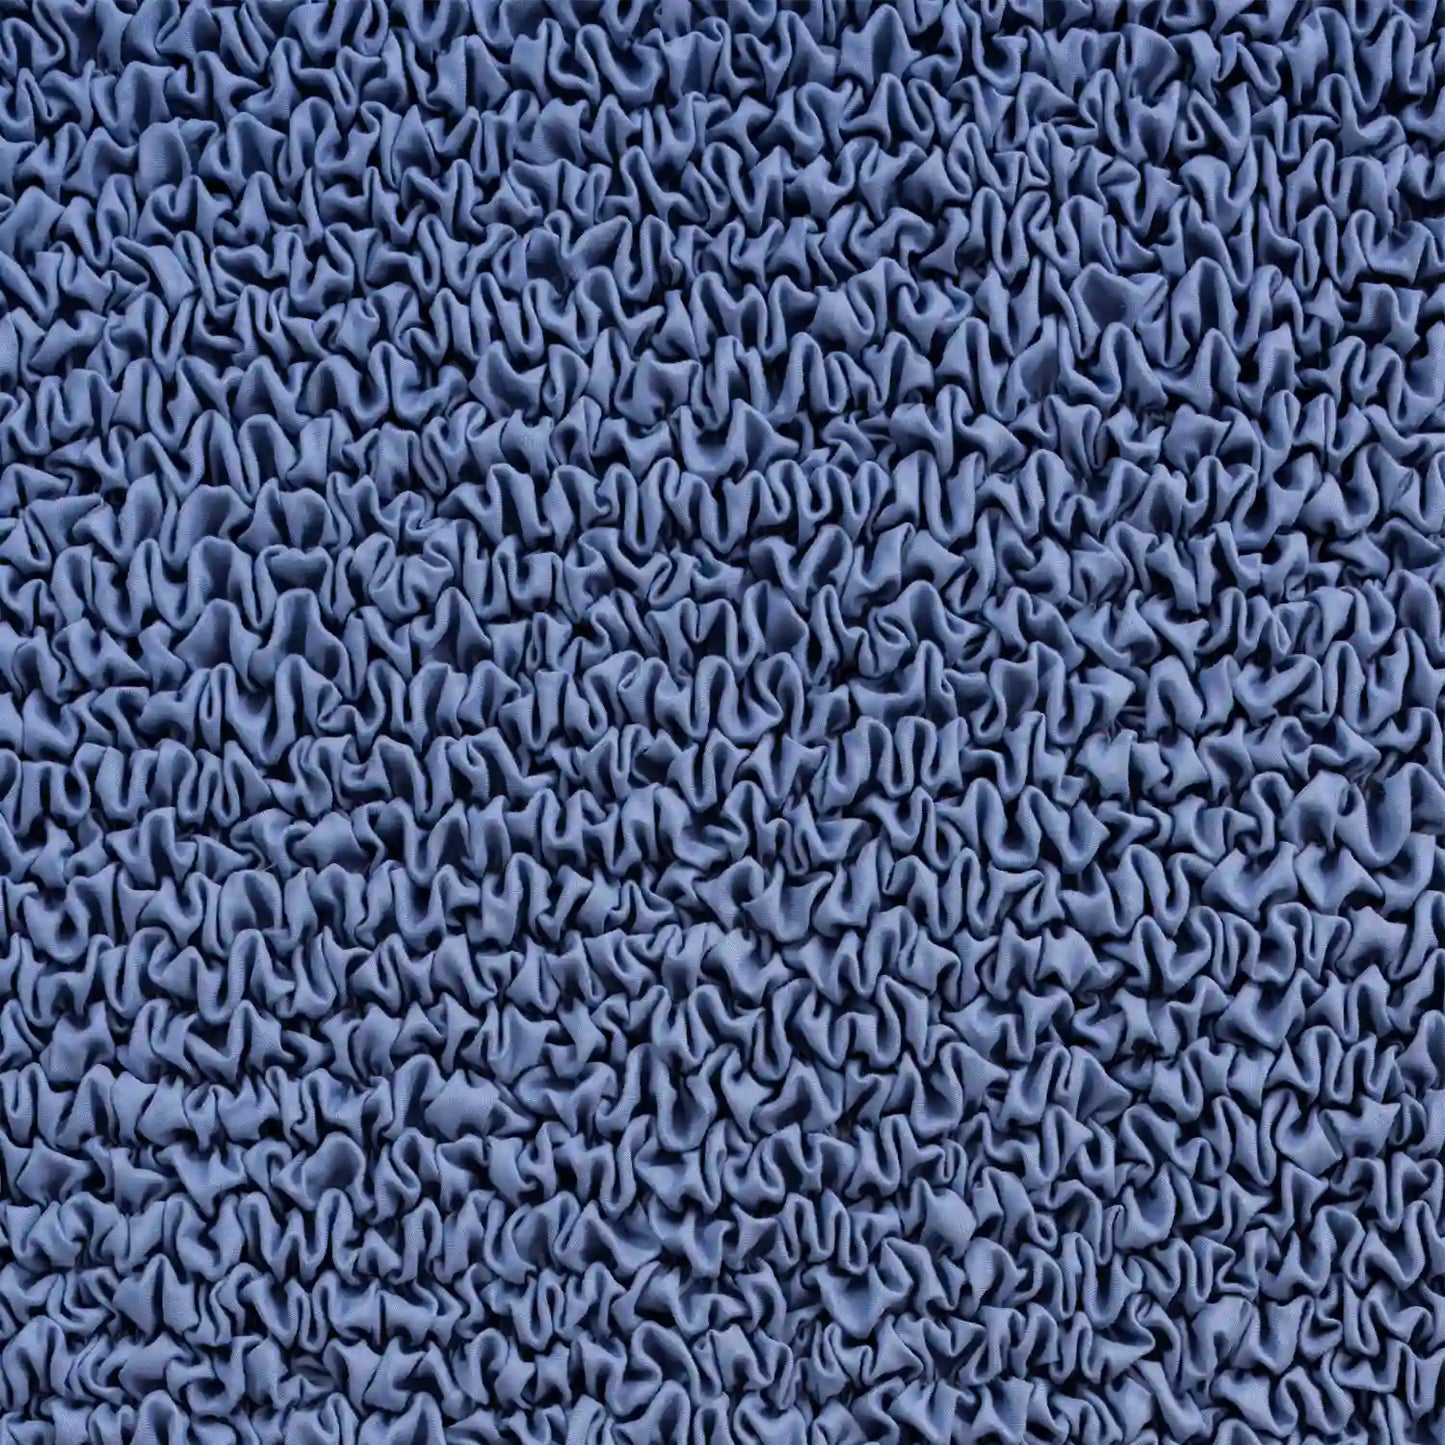 Corner Sofa Cover - Blue, Microfibra